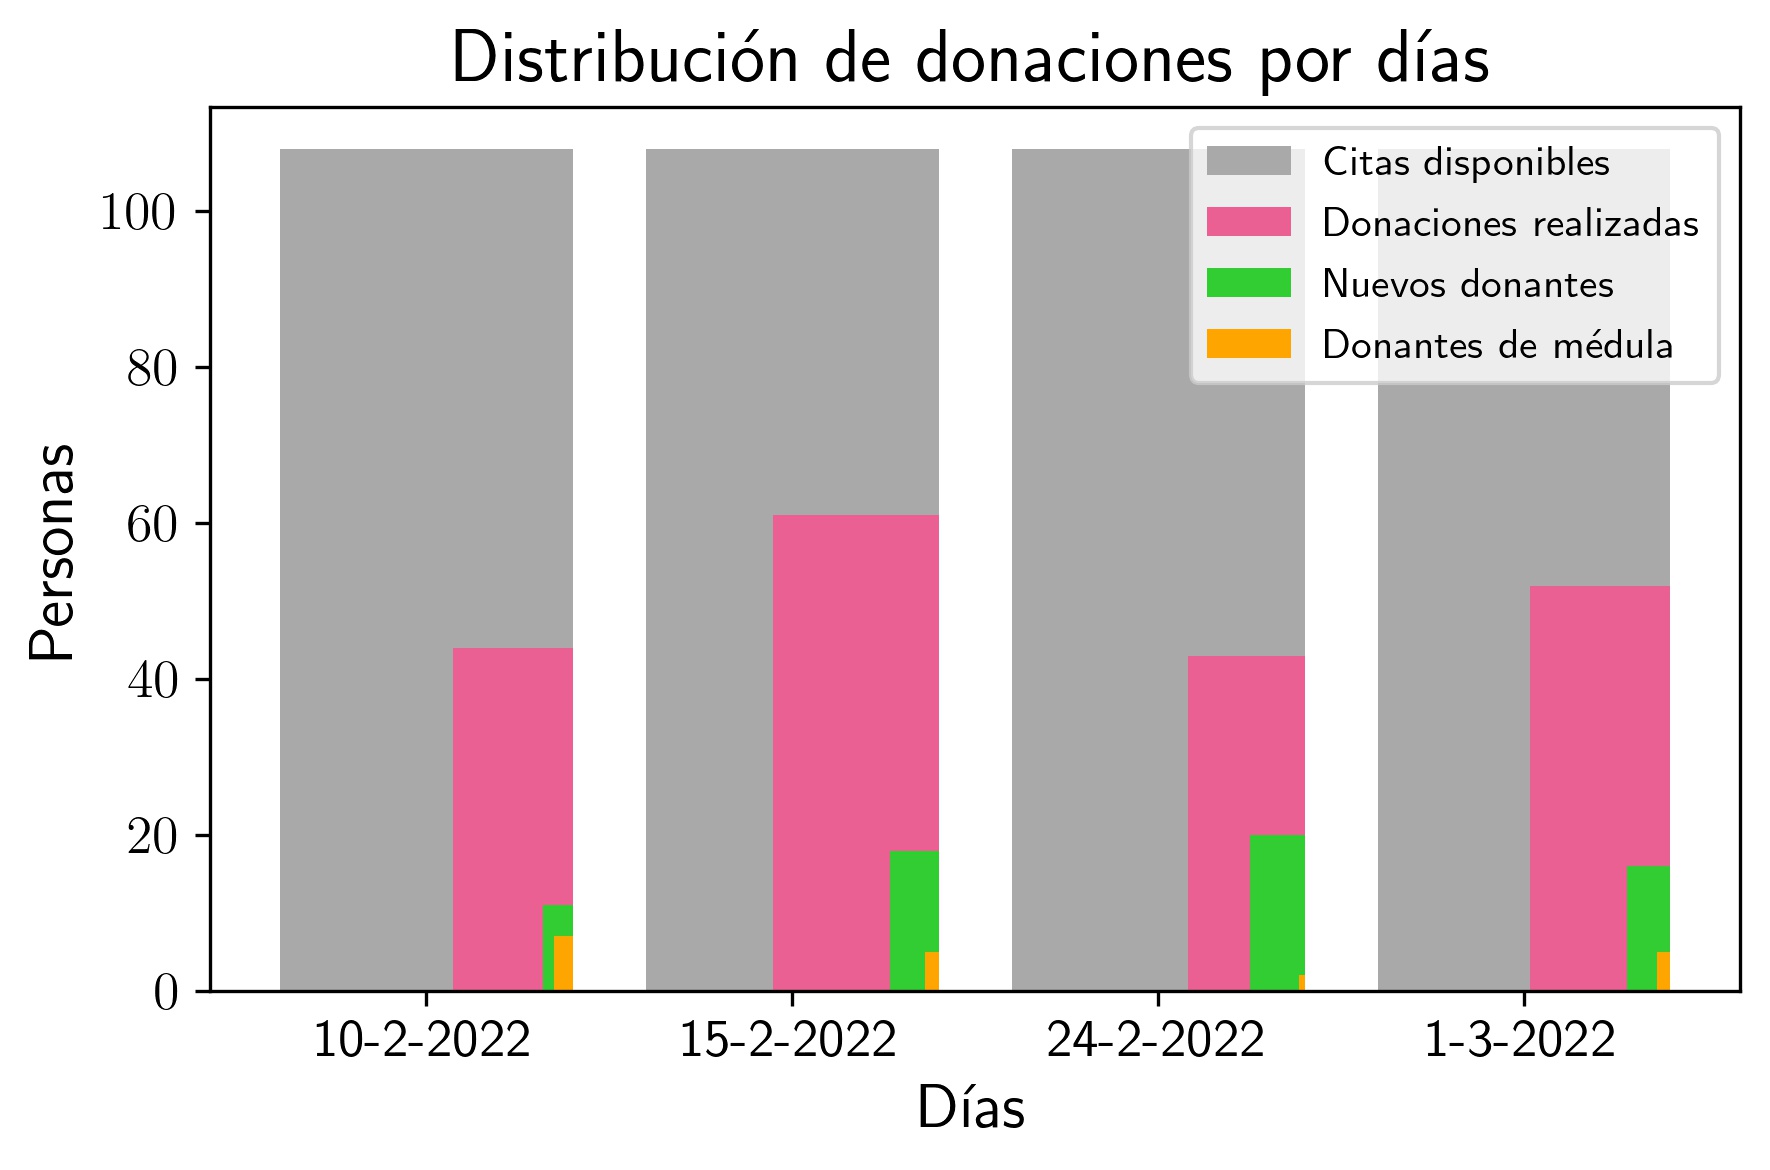 Distribucion_donaciones_dias_v3.jpg